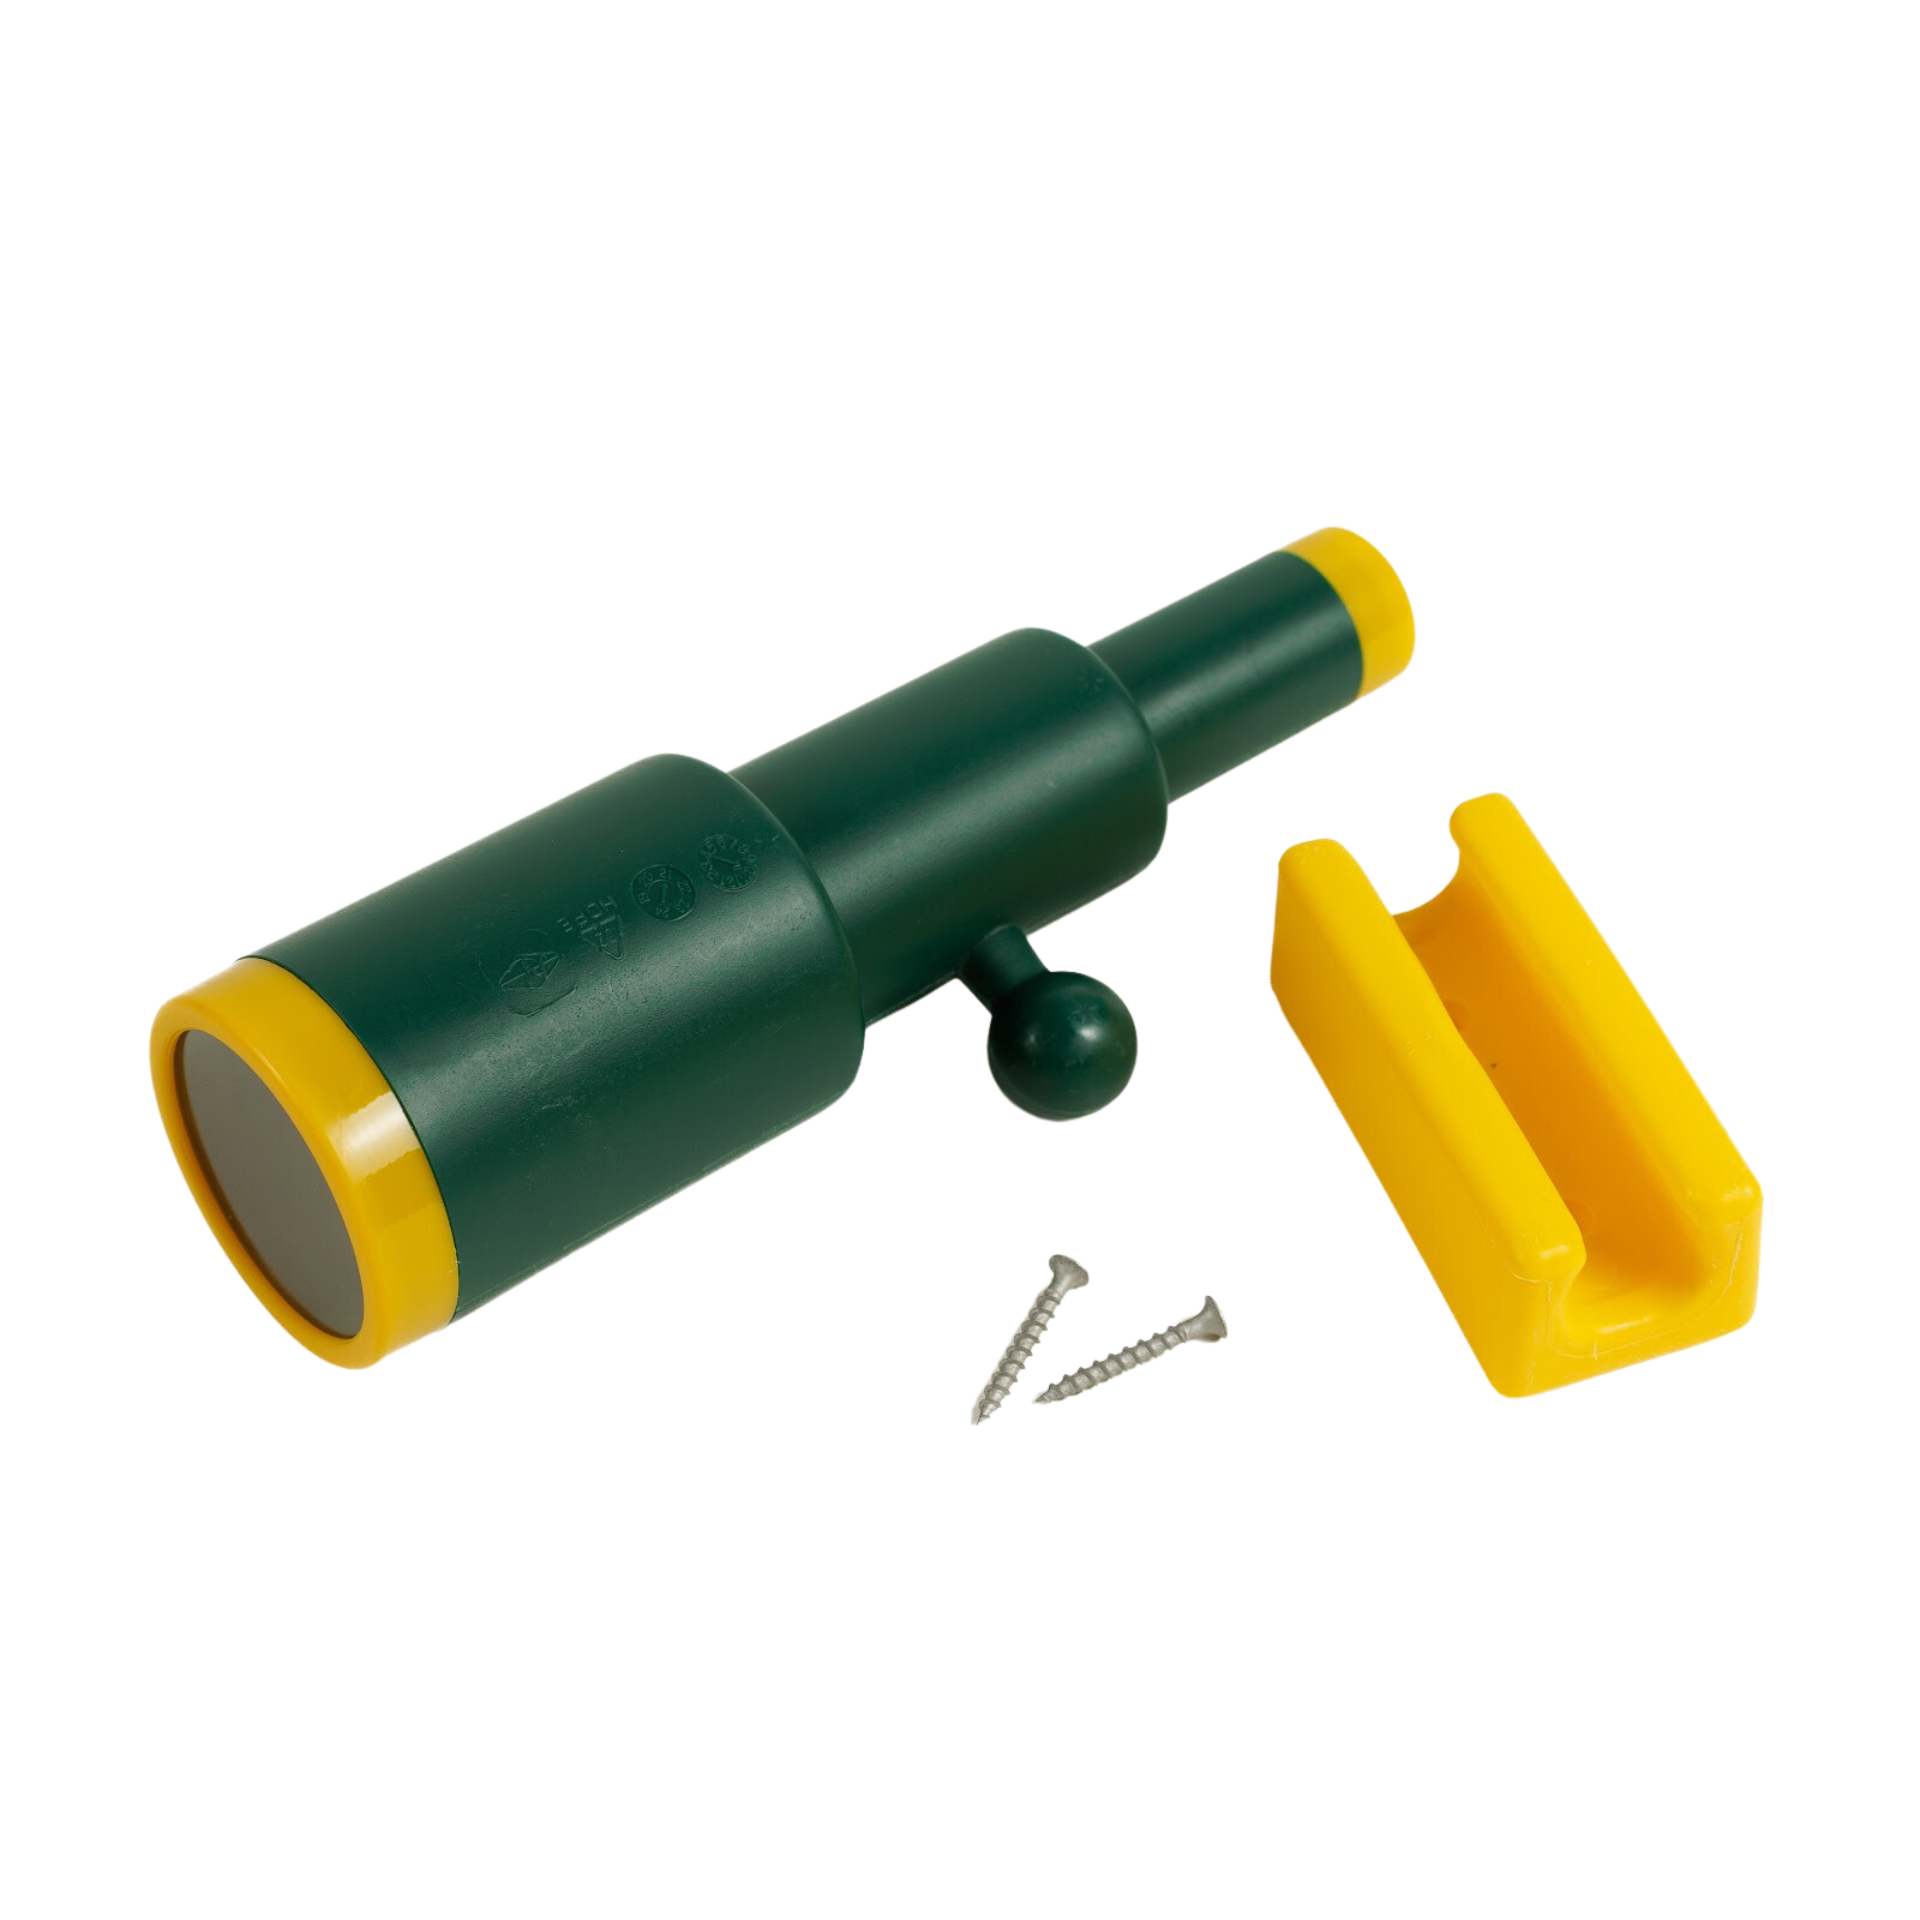 Play Set Telescope, Green & Yellow Parts